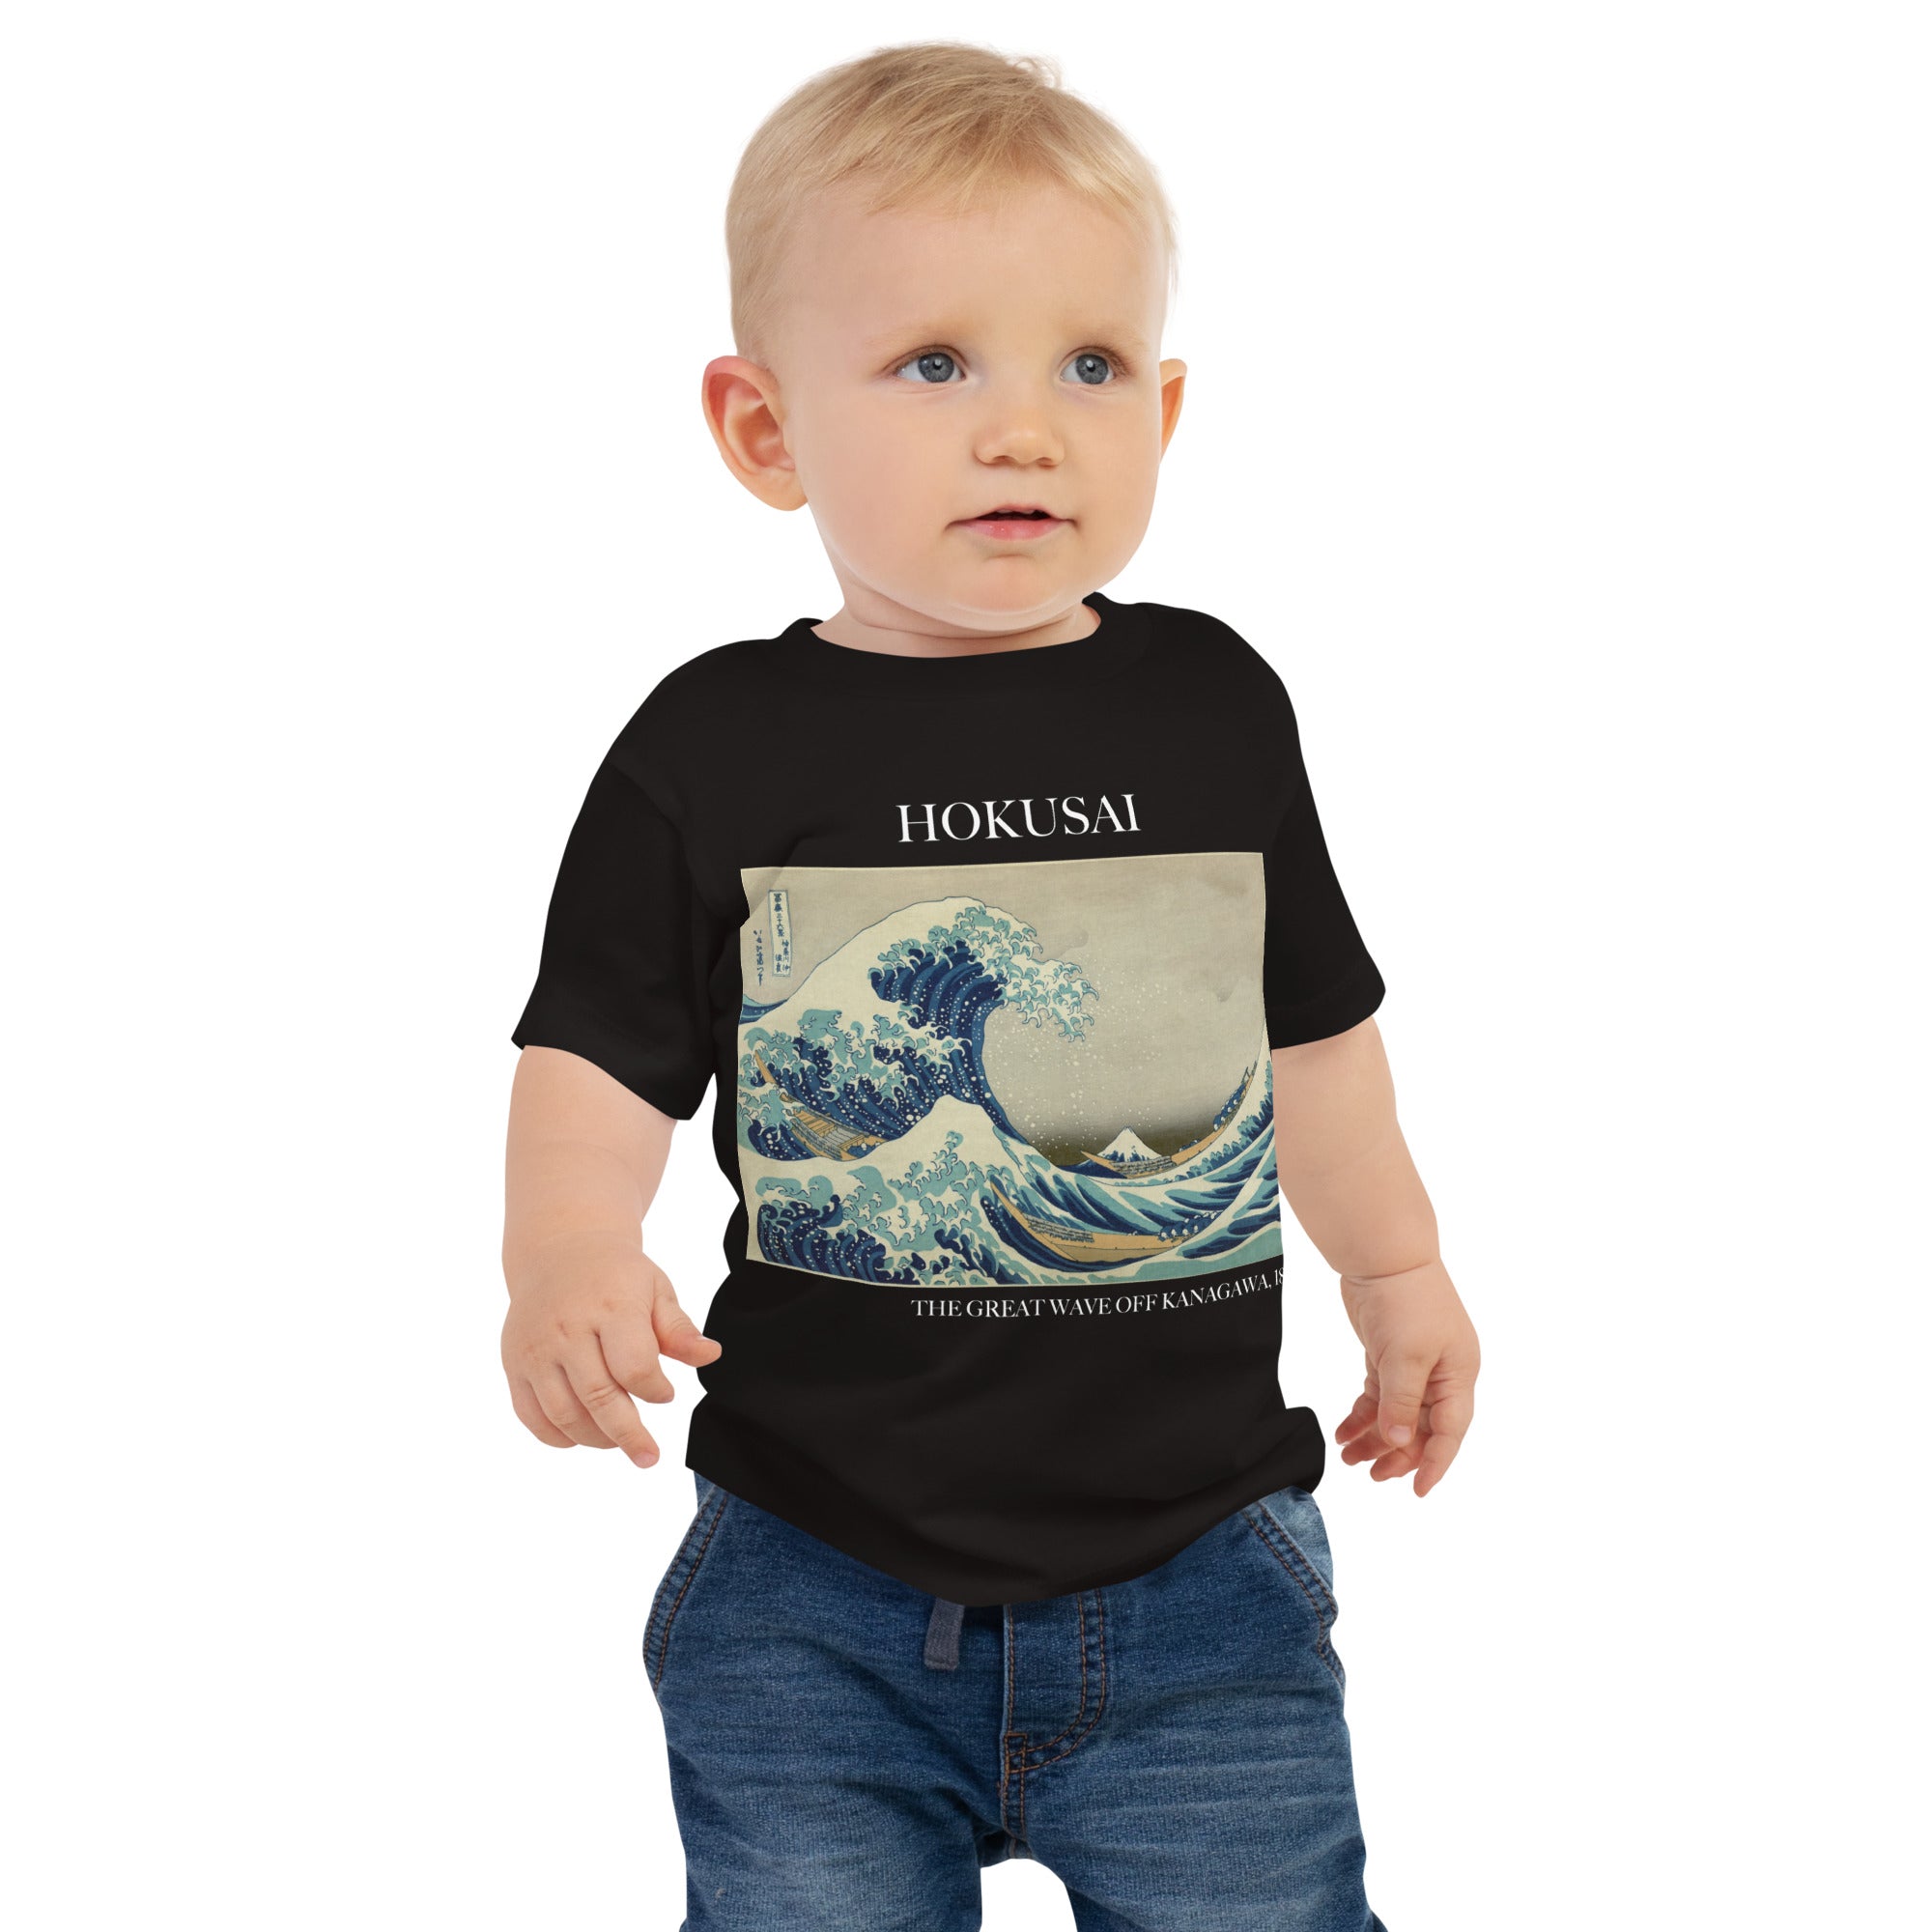 Hokusai „Die große Welle vor Kanagawa“ Berühmtes Gemälde Baby-T-Shirt | Premium Baby Art T-Shirt